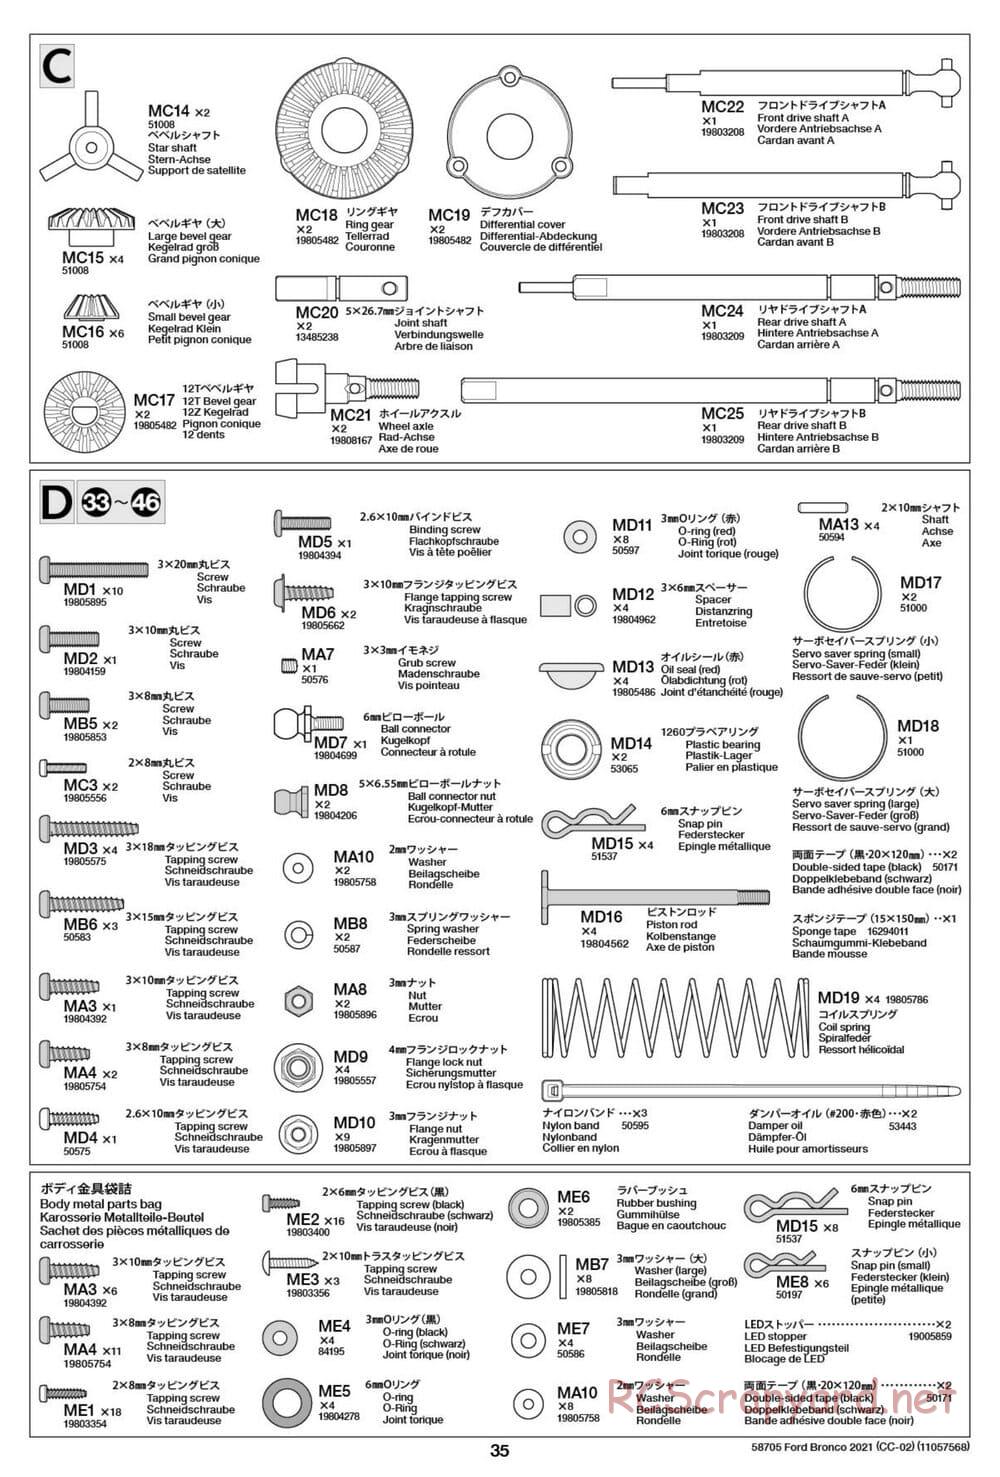 Tamiya - Ford Bronco 2021 - CC-02 Chassis - Manual - Page 35